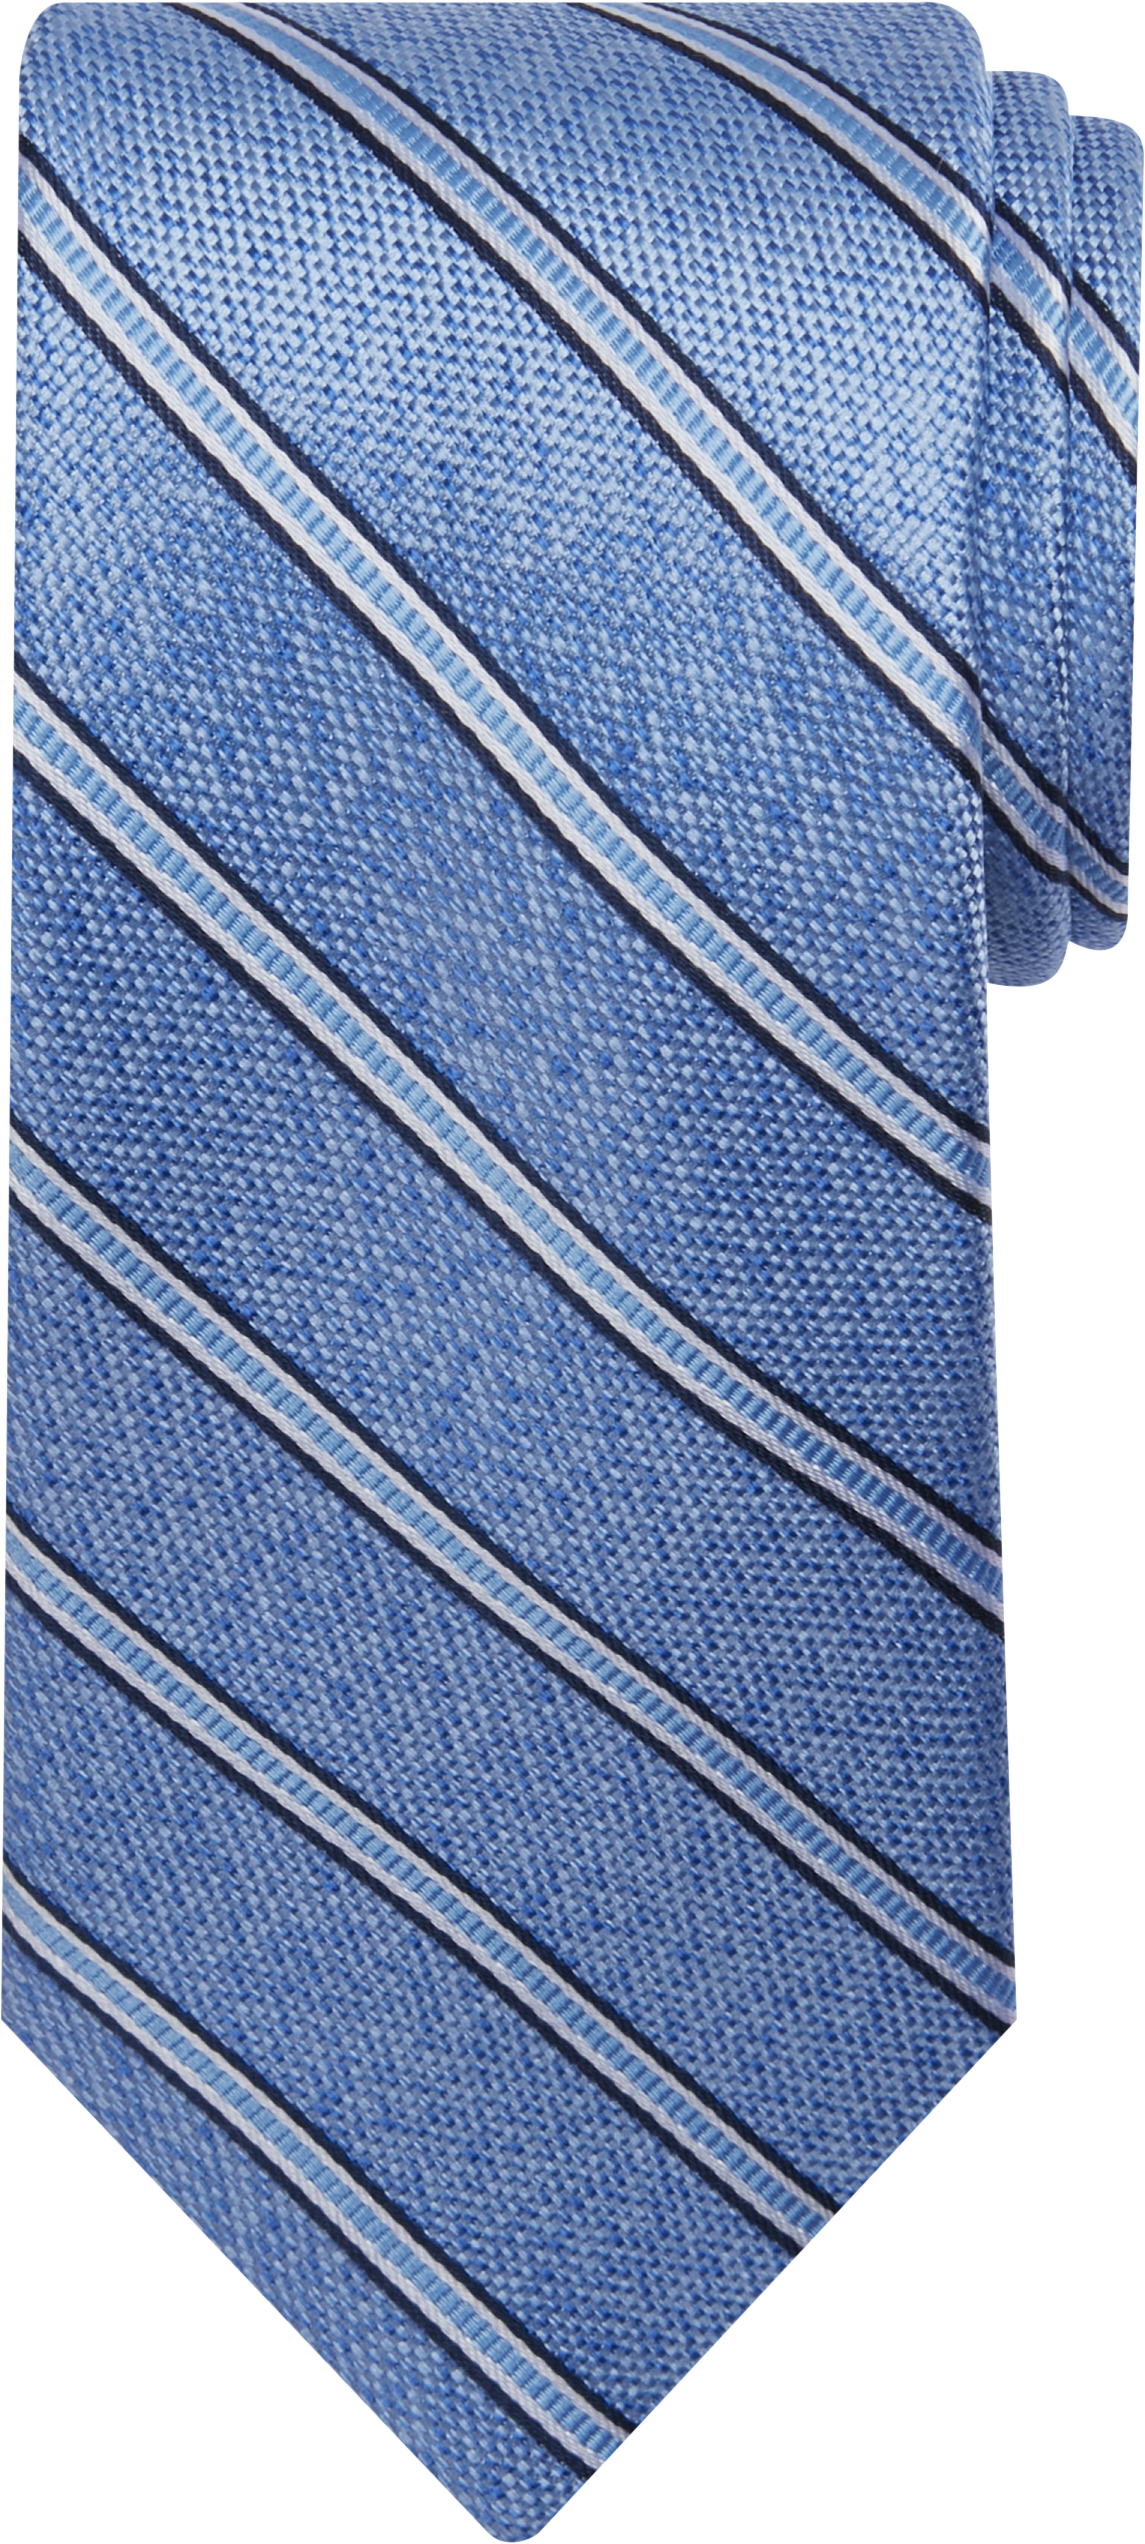 Narrow Sunny Stripe Tie